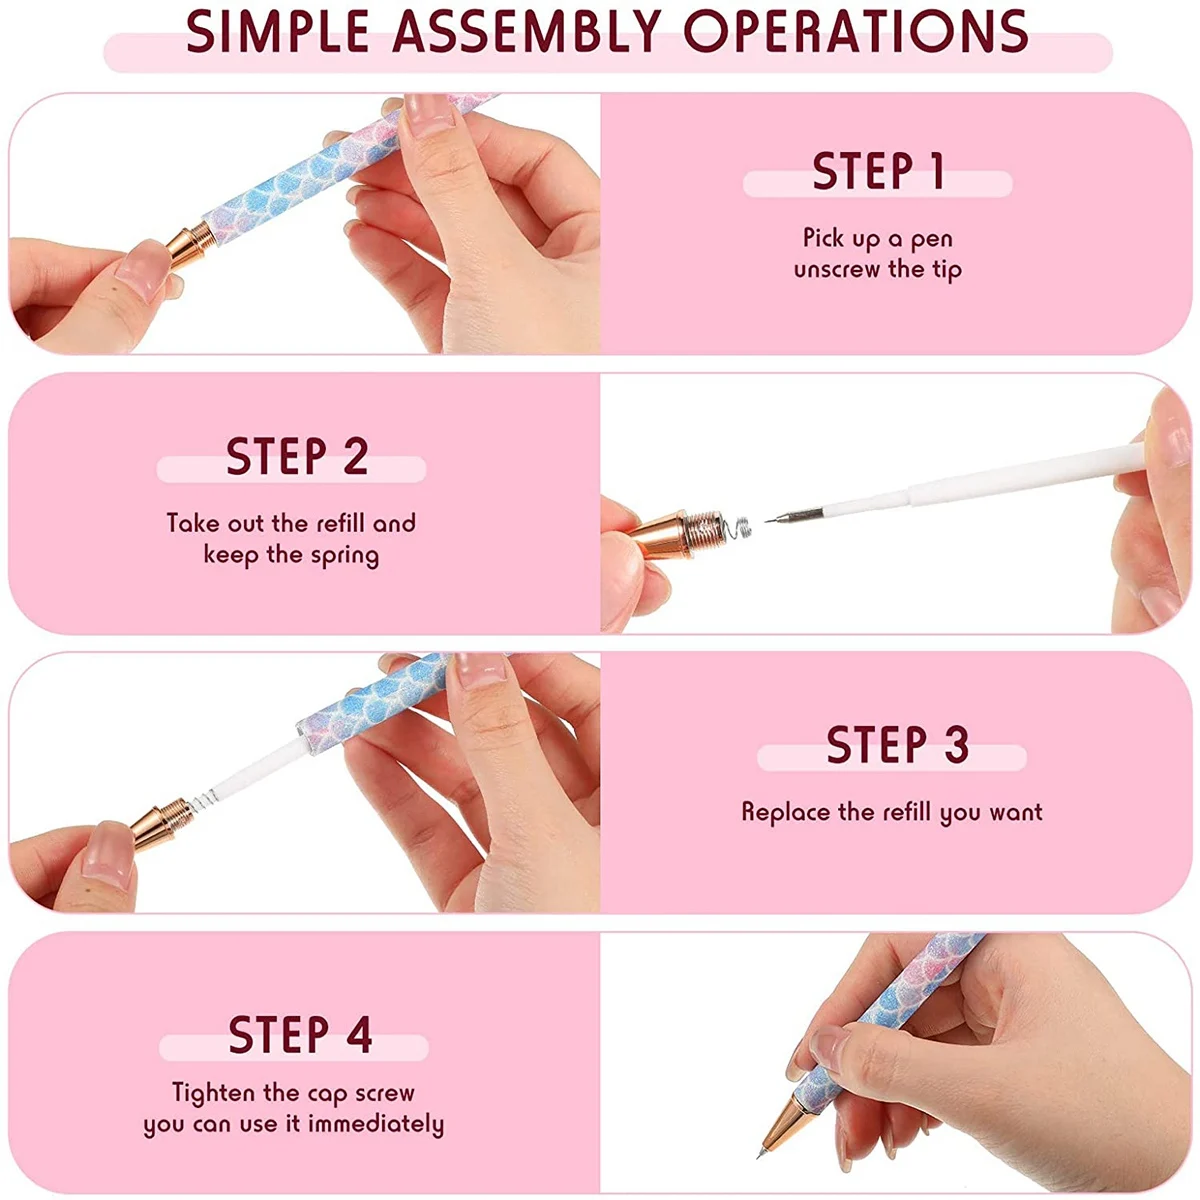 Pink Glitter Weeding Pen for Vinyl, HTV or Paper, Epoxy Pin Pen